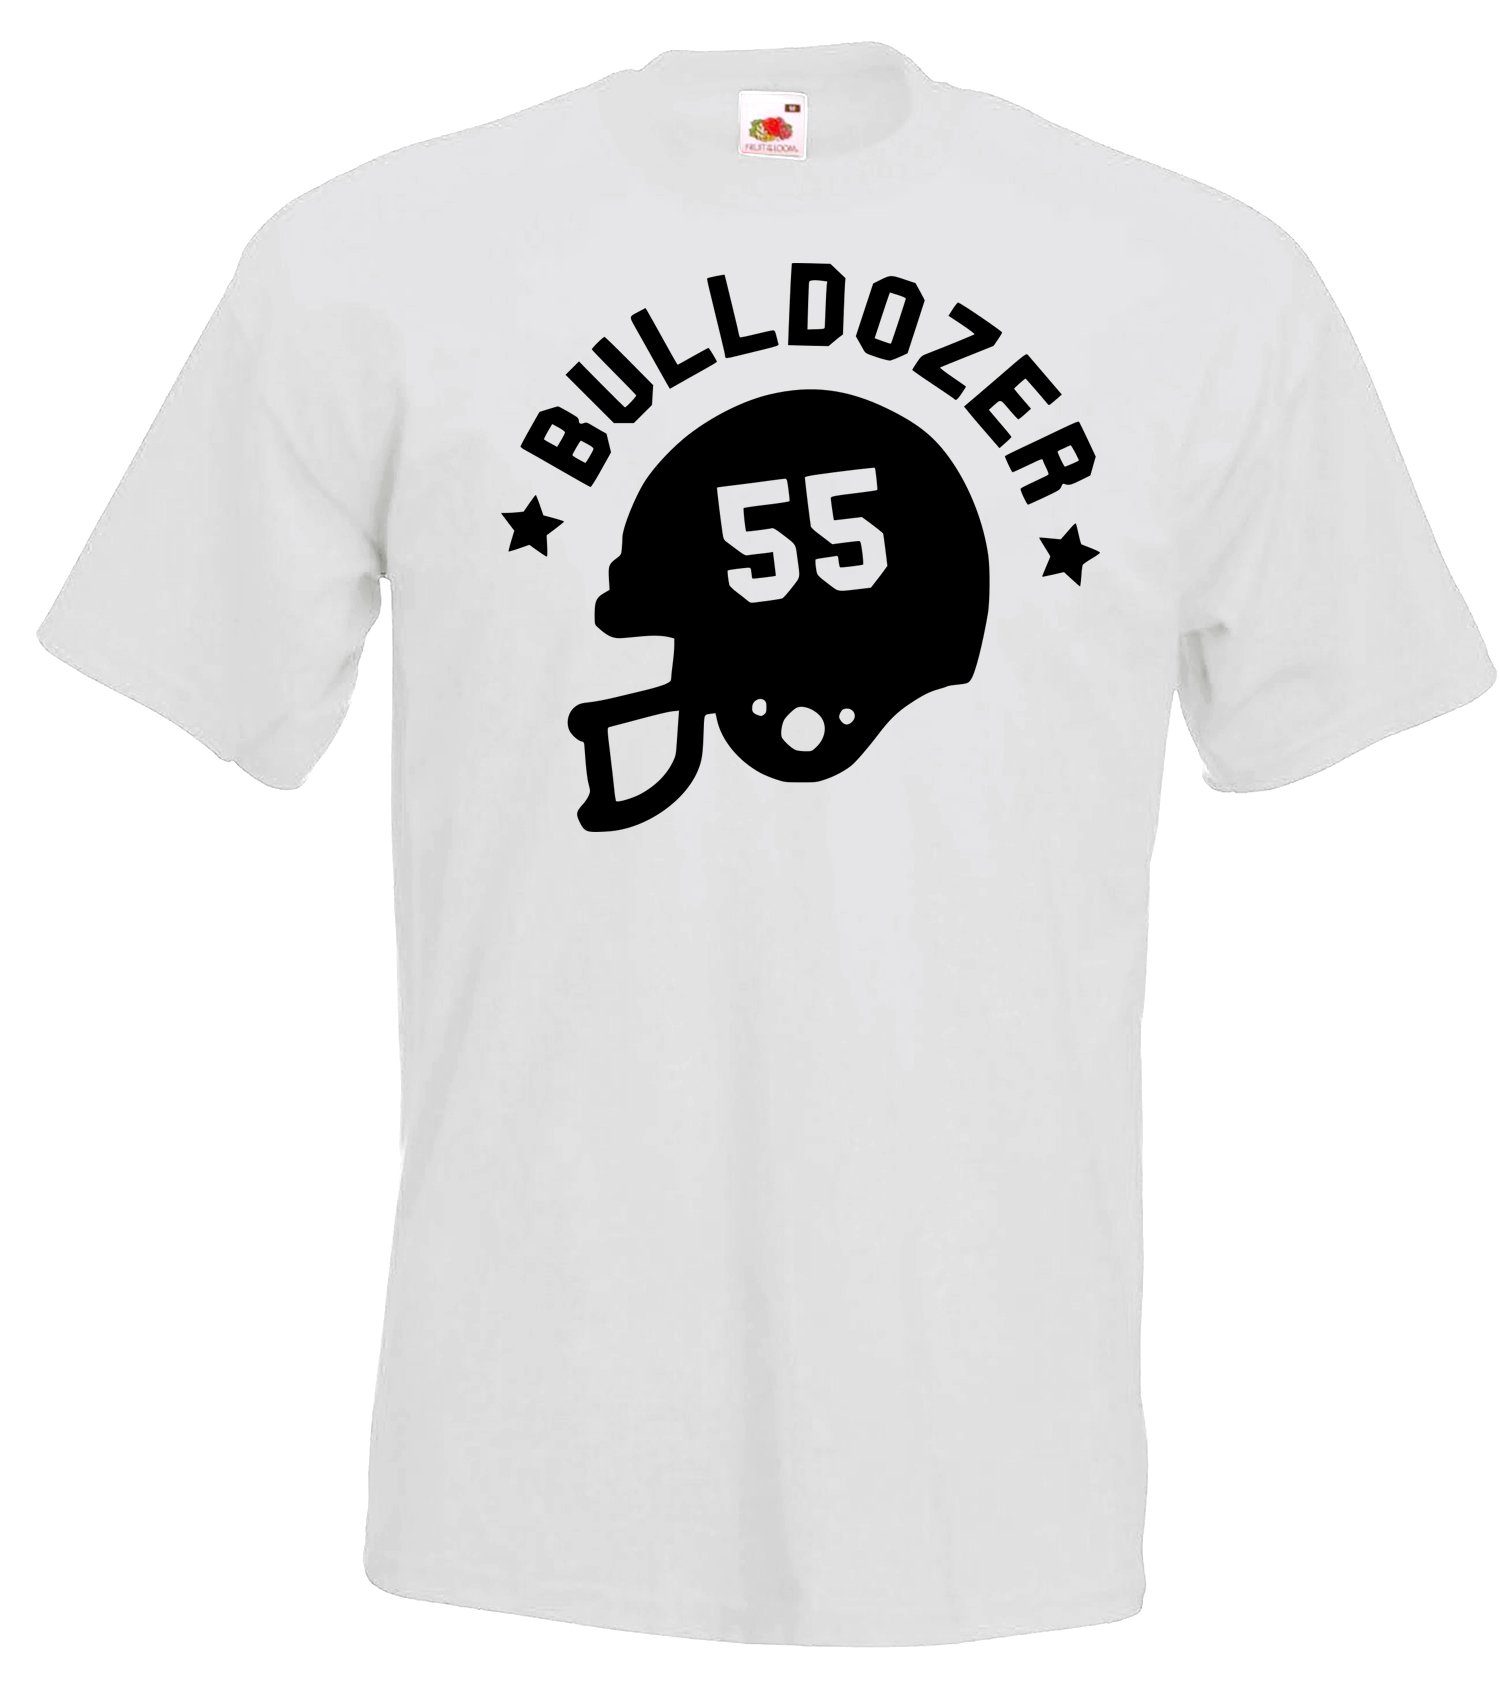 Herren Youth Frontprint mit trendigem T-Shirt Designz Shirt Bulldozer Weiss